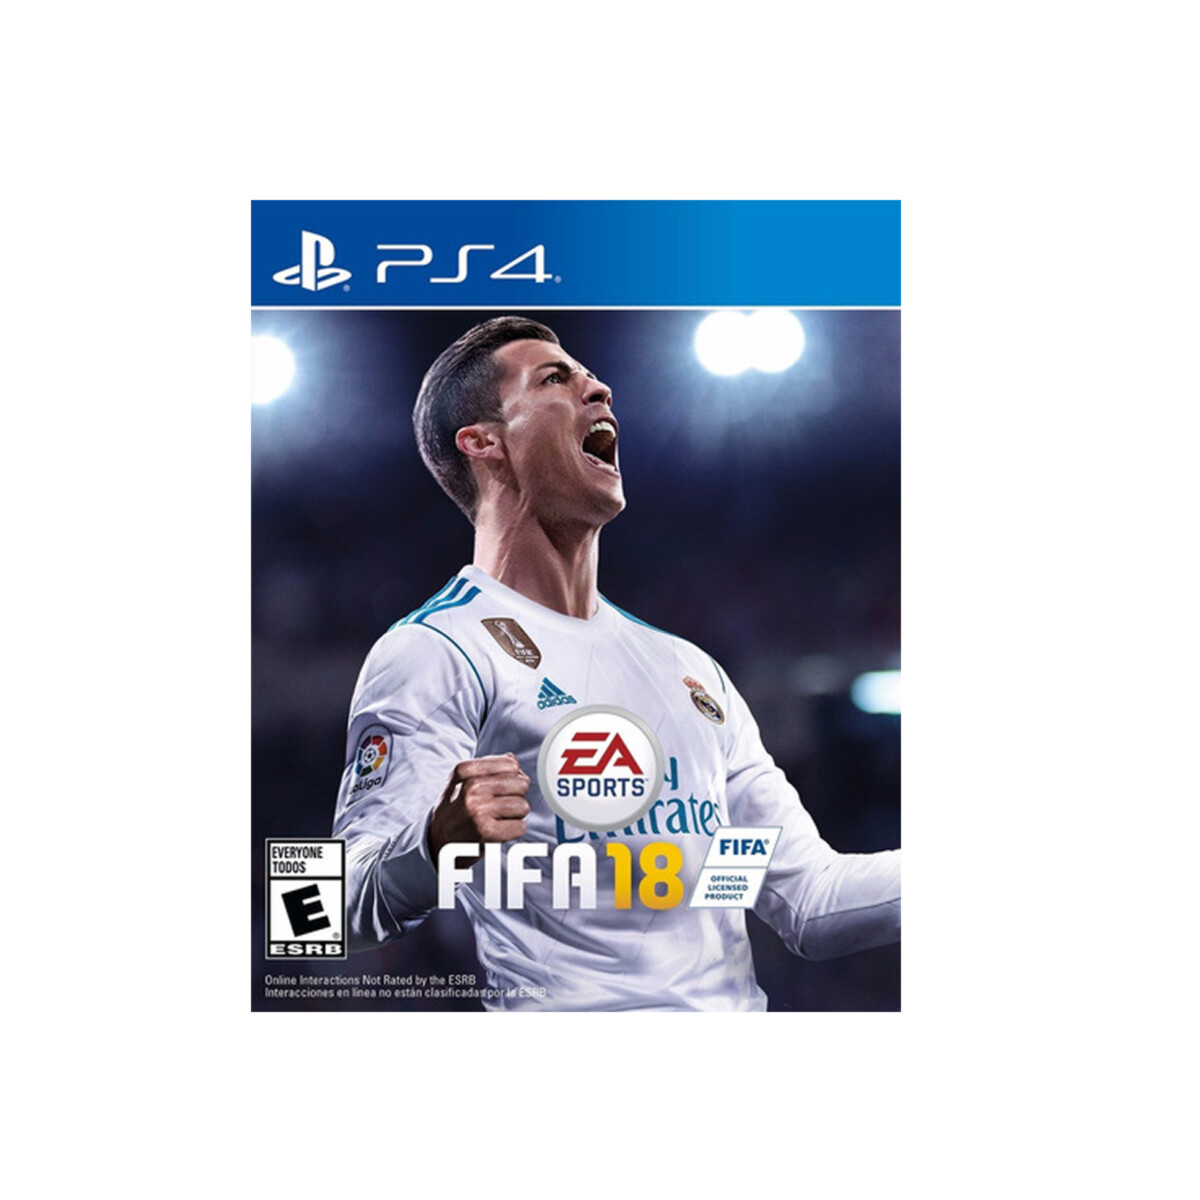 PS4 FIFA 18 